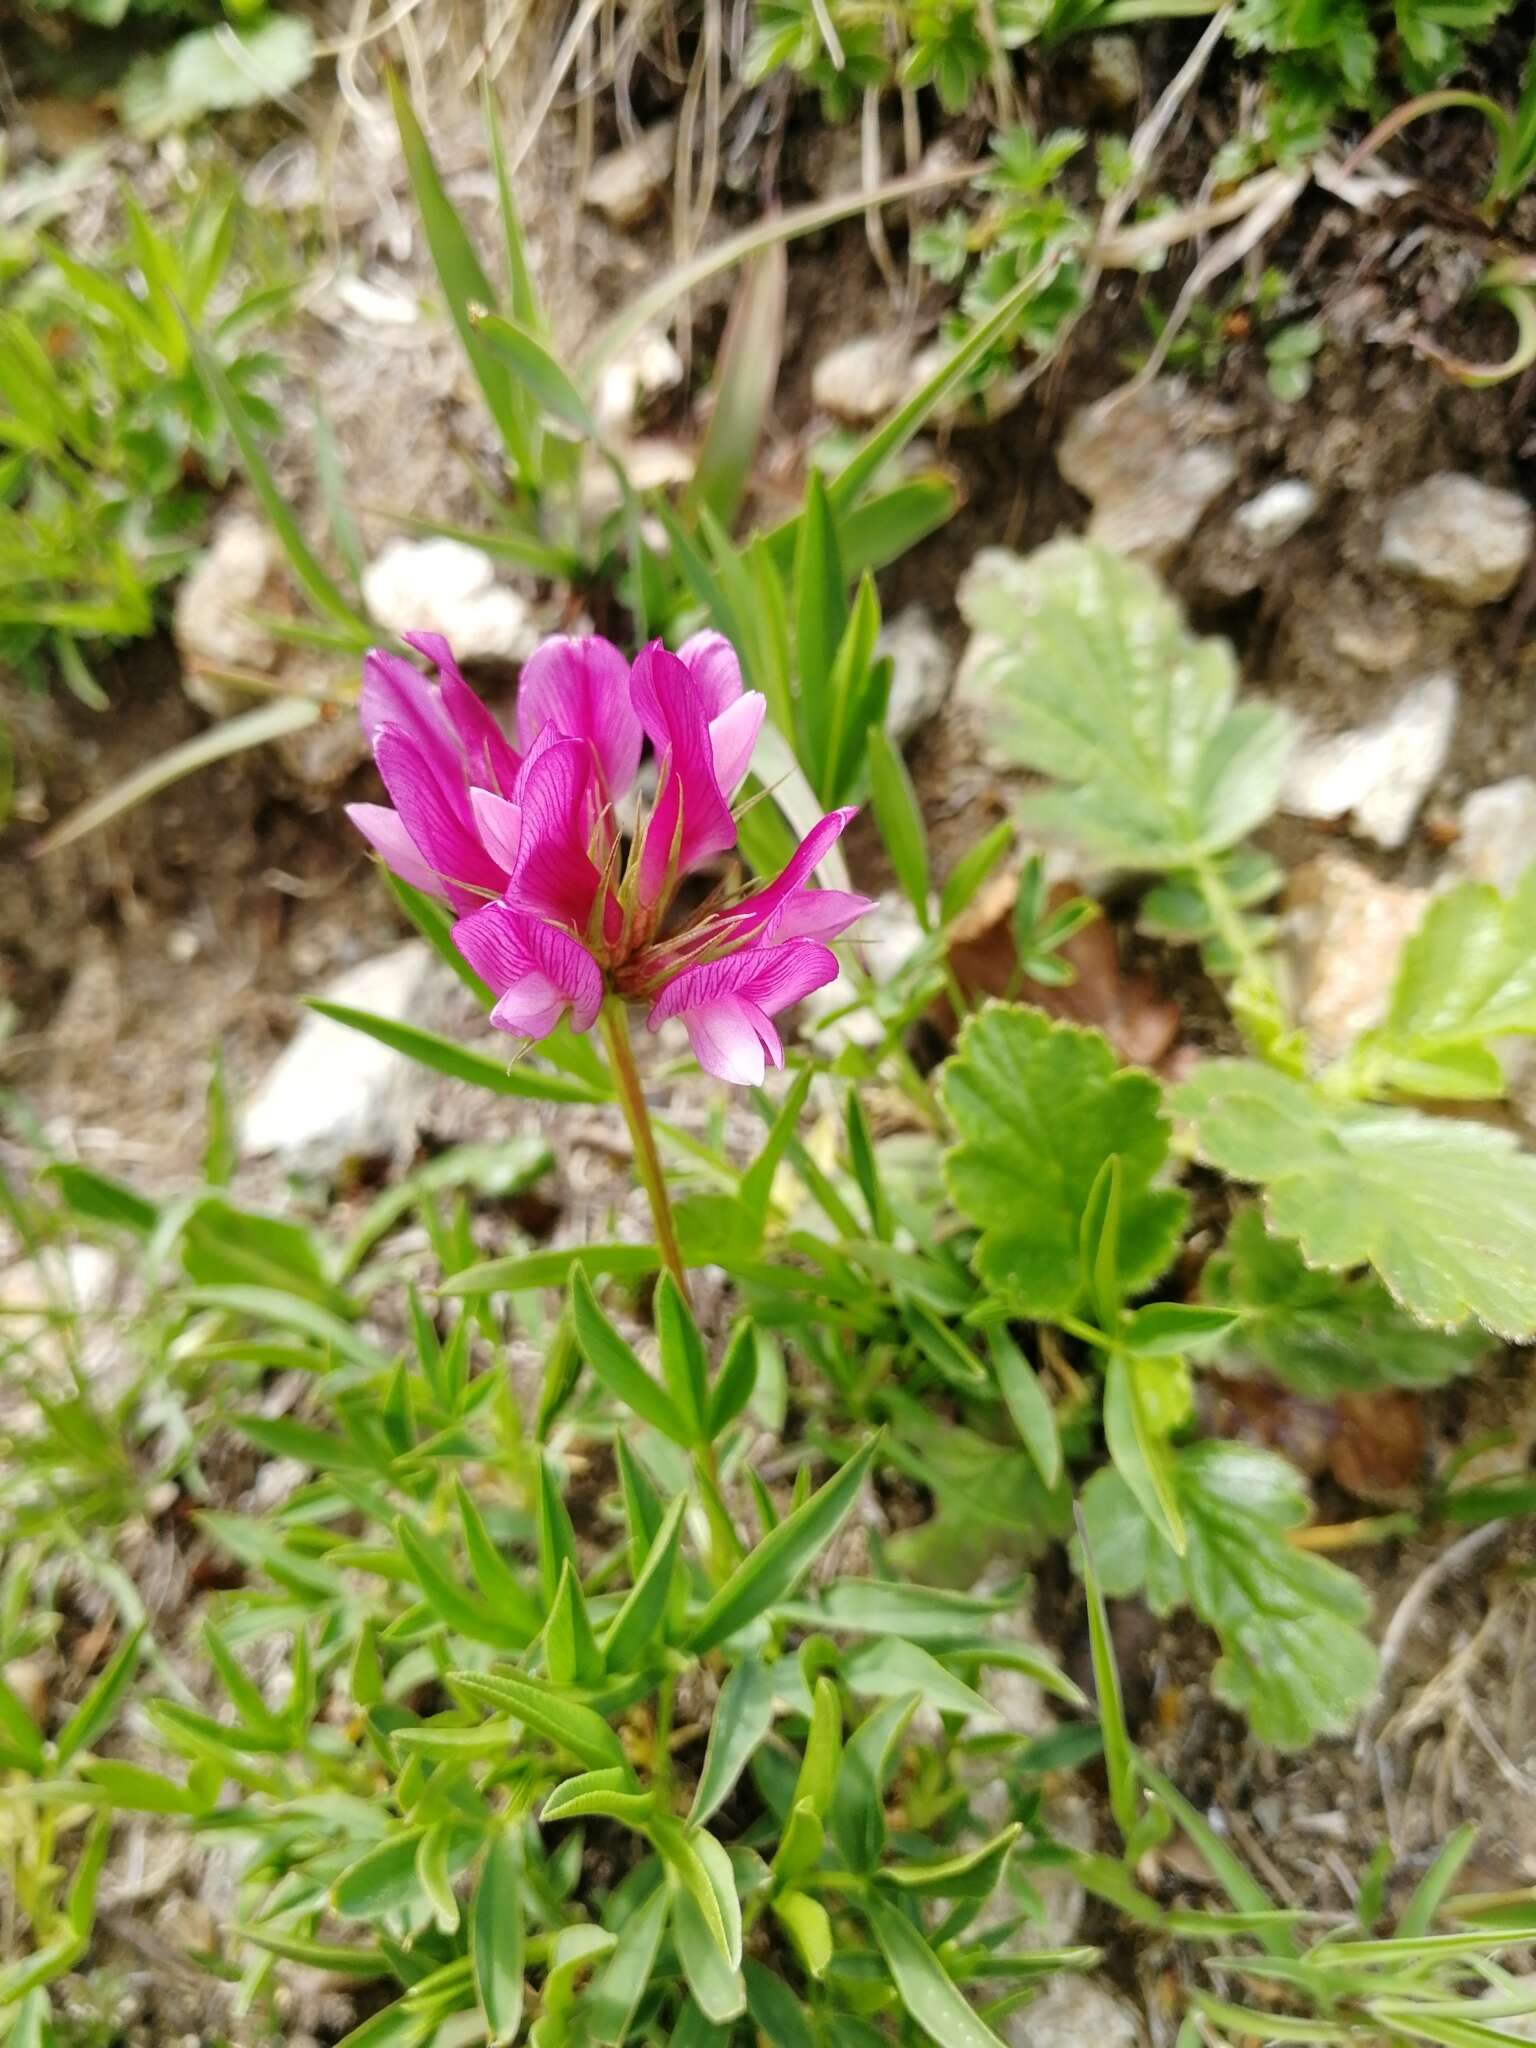 Image of alpine clover